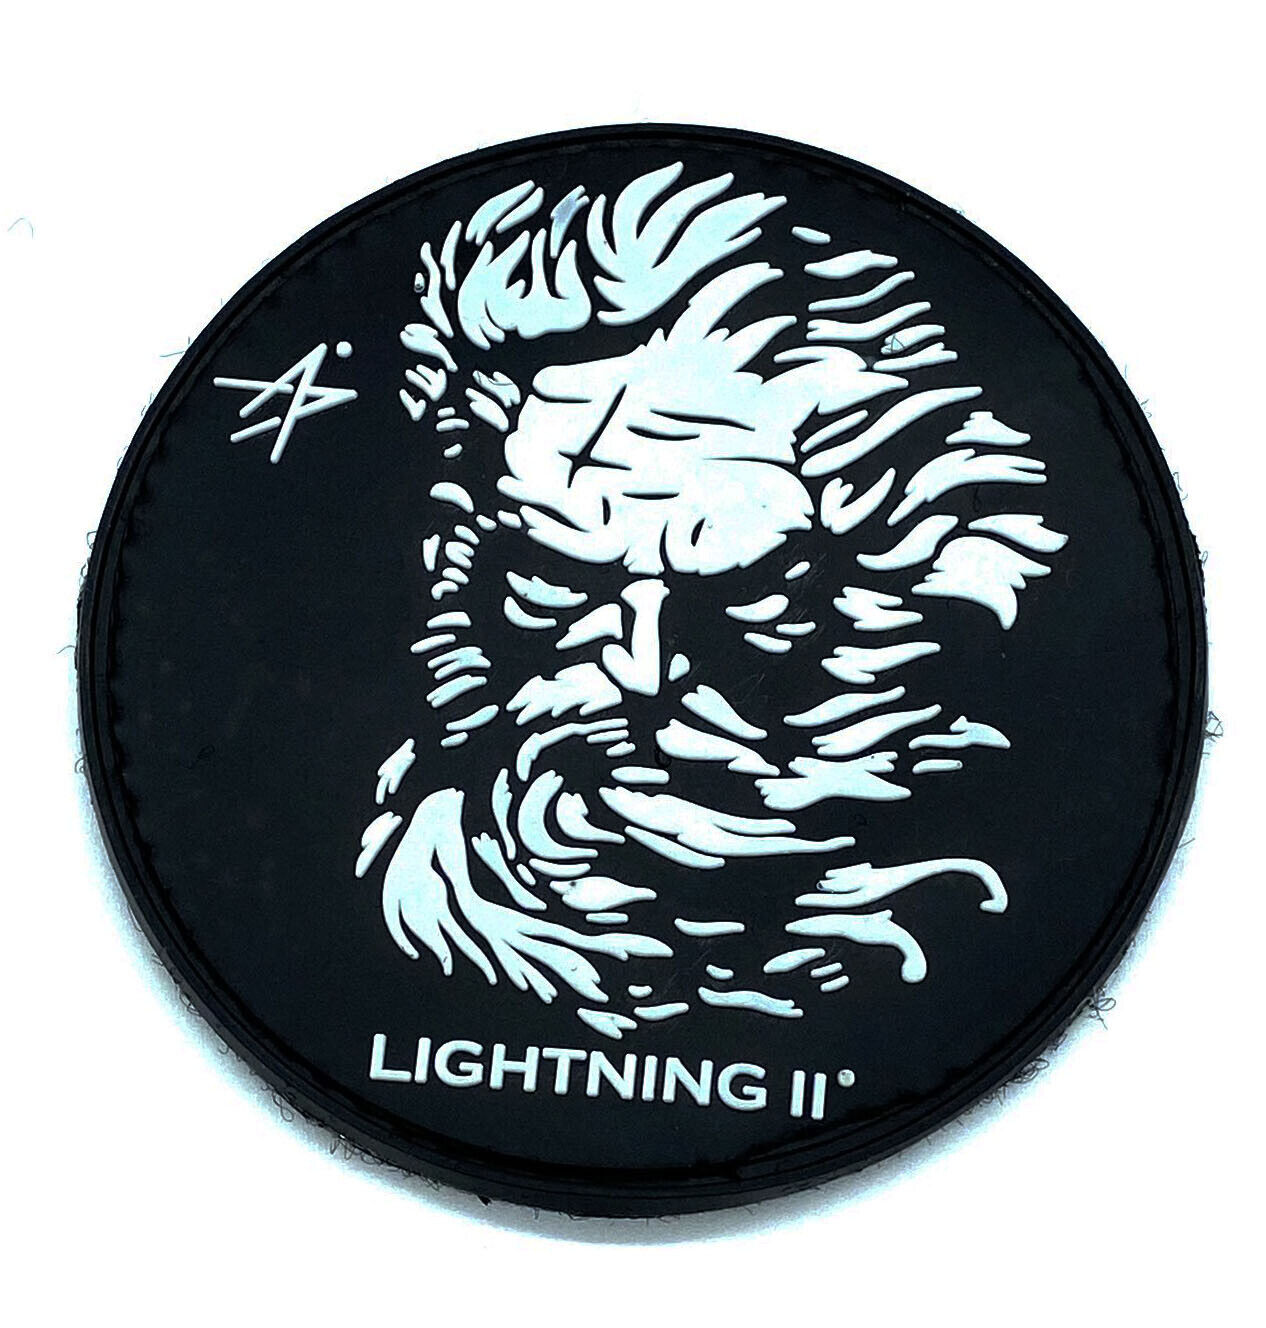 Lockheed Martin® F-35 Lightning II® Zeus PVC patch, 3 in Glow in the Dark